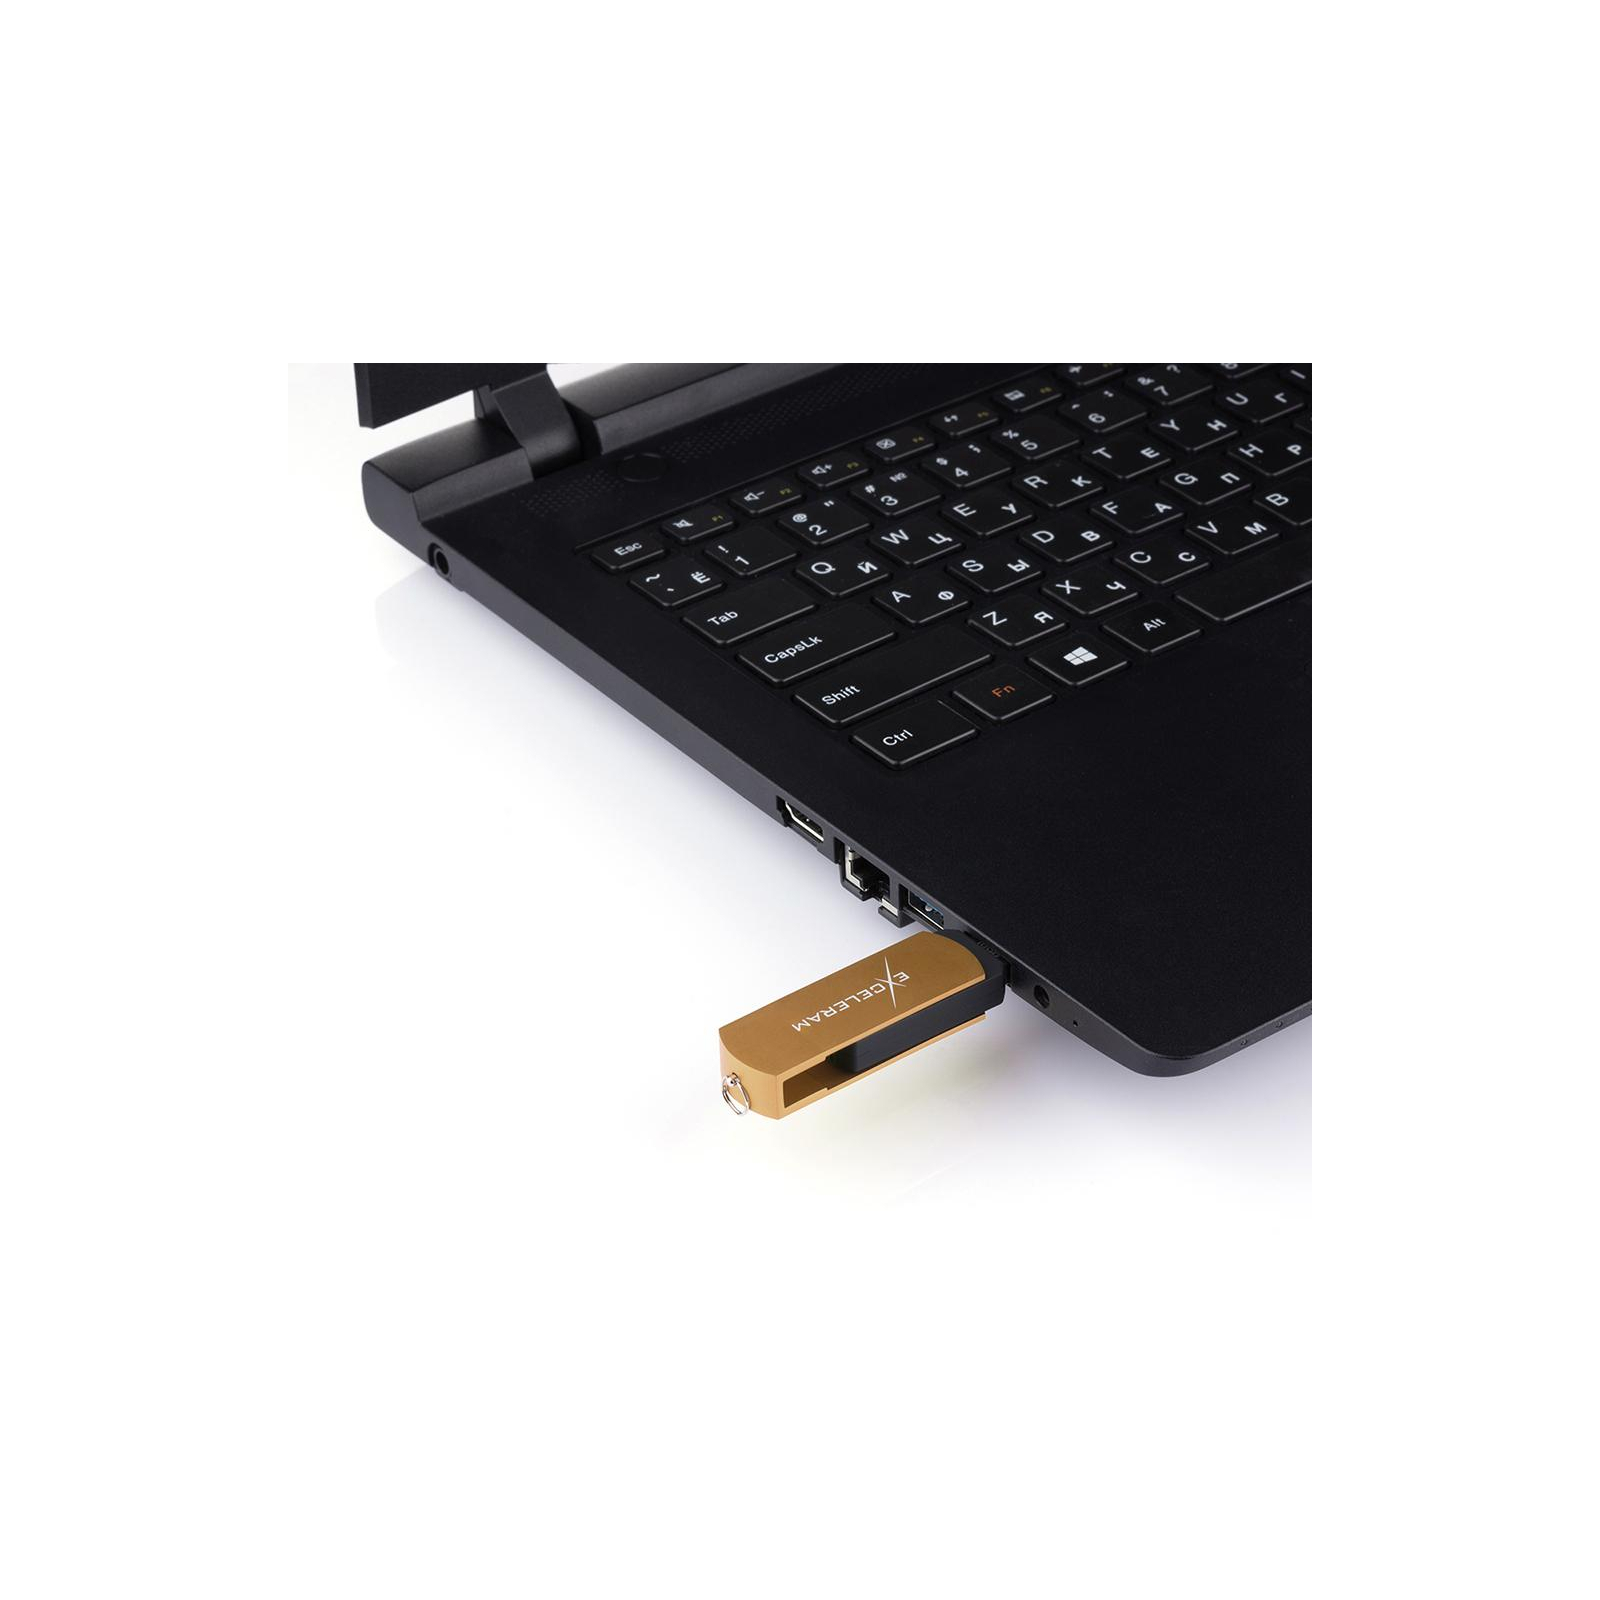 USB флеш накопитель eXceleram 8GB P2 Series Brown/Black USB 2.0 (EXP2U2BRB08) изображение 7